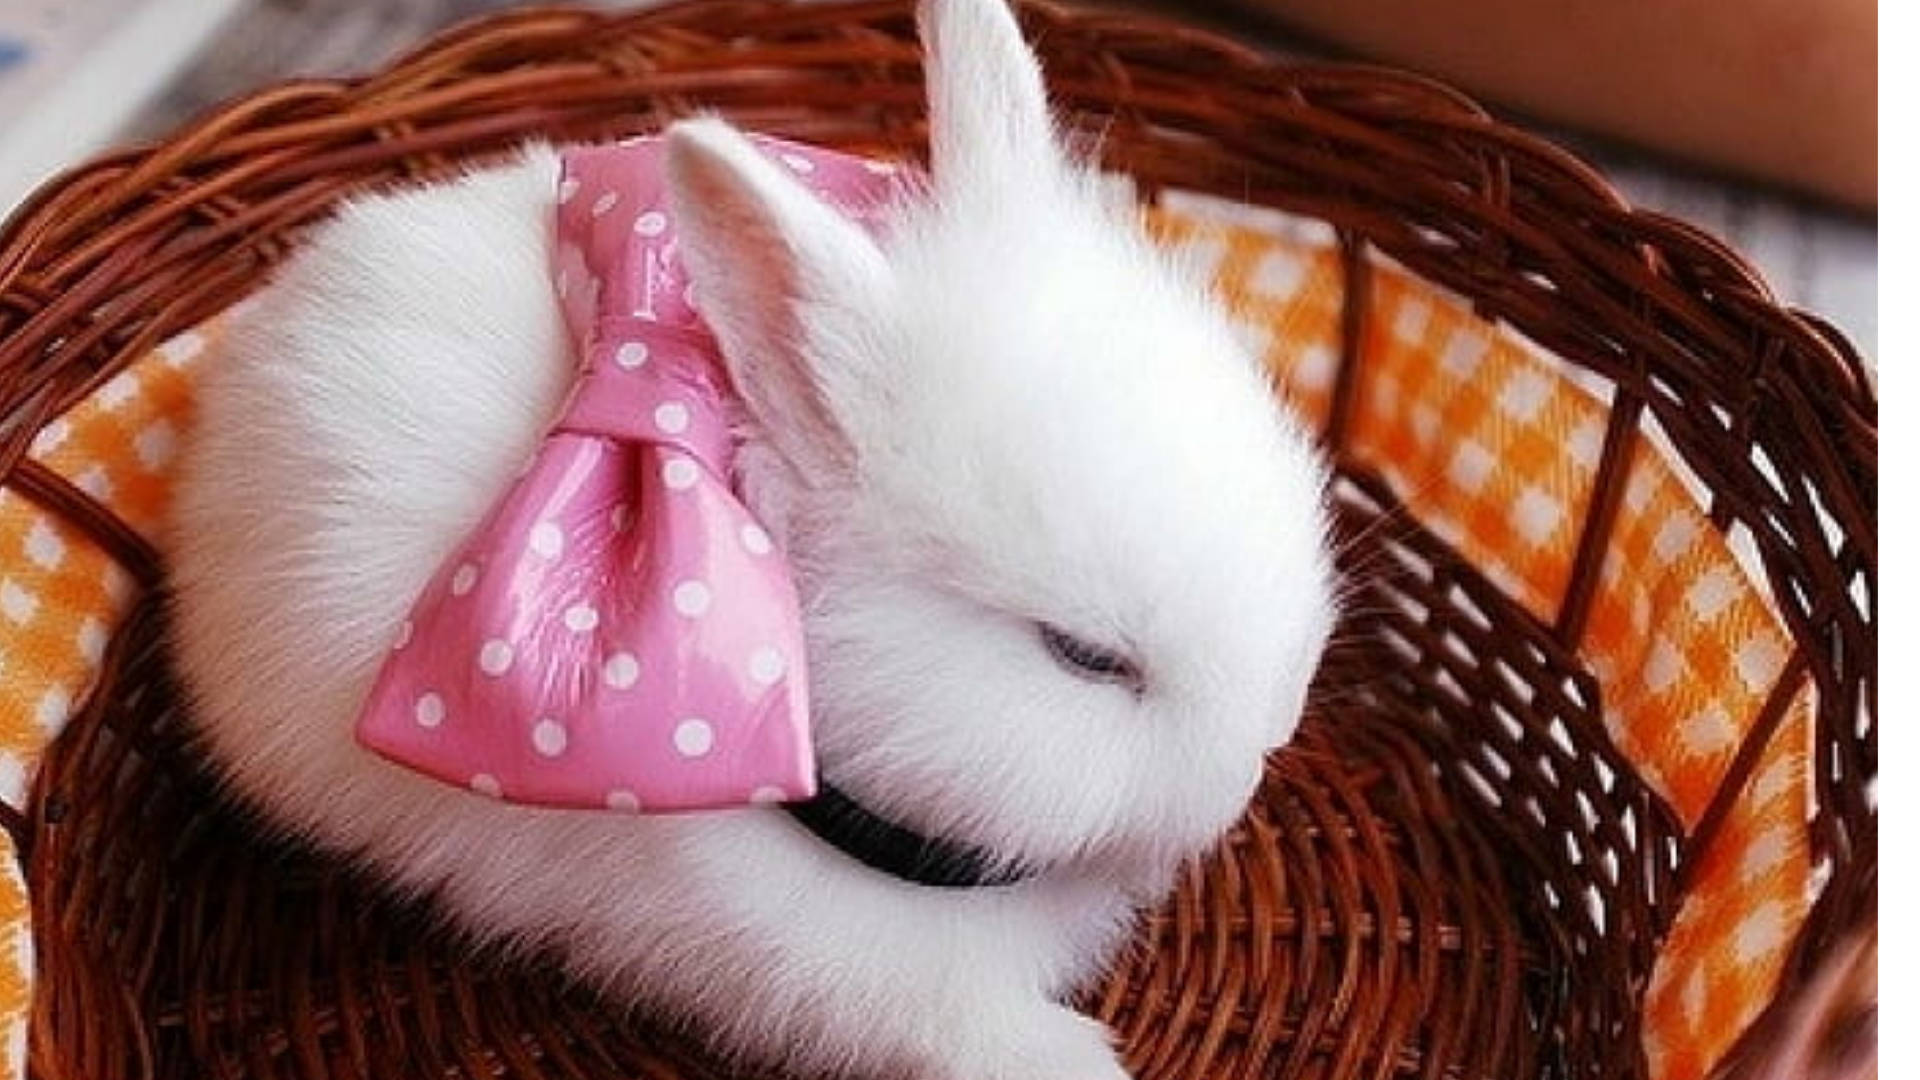 White Rabbit In A Basket